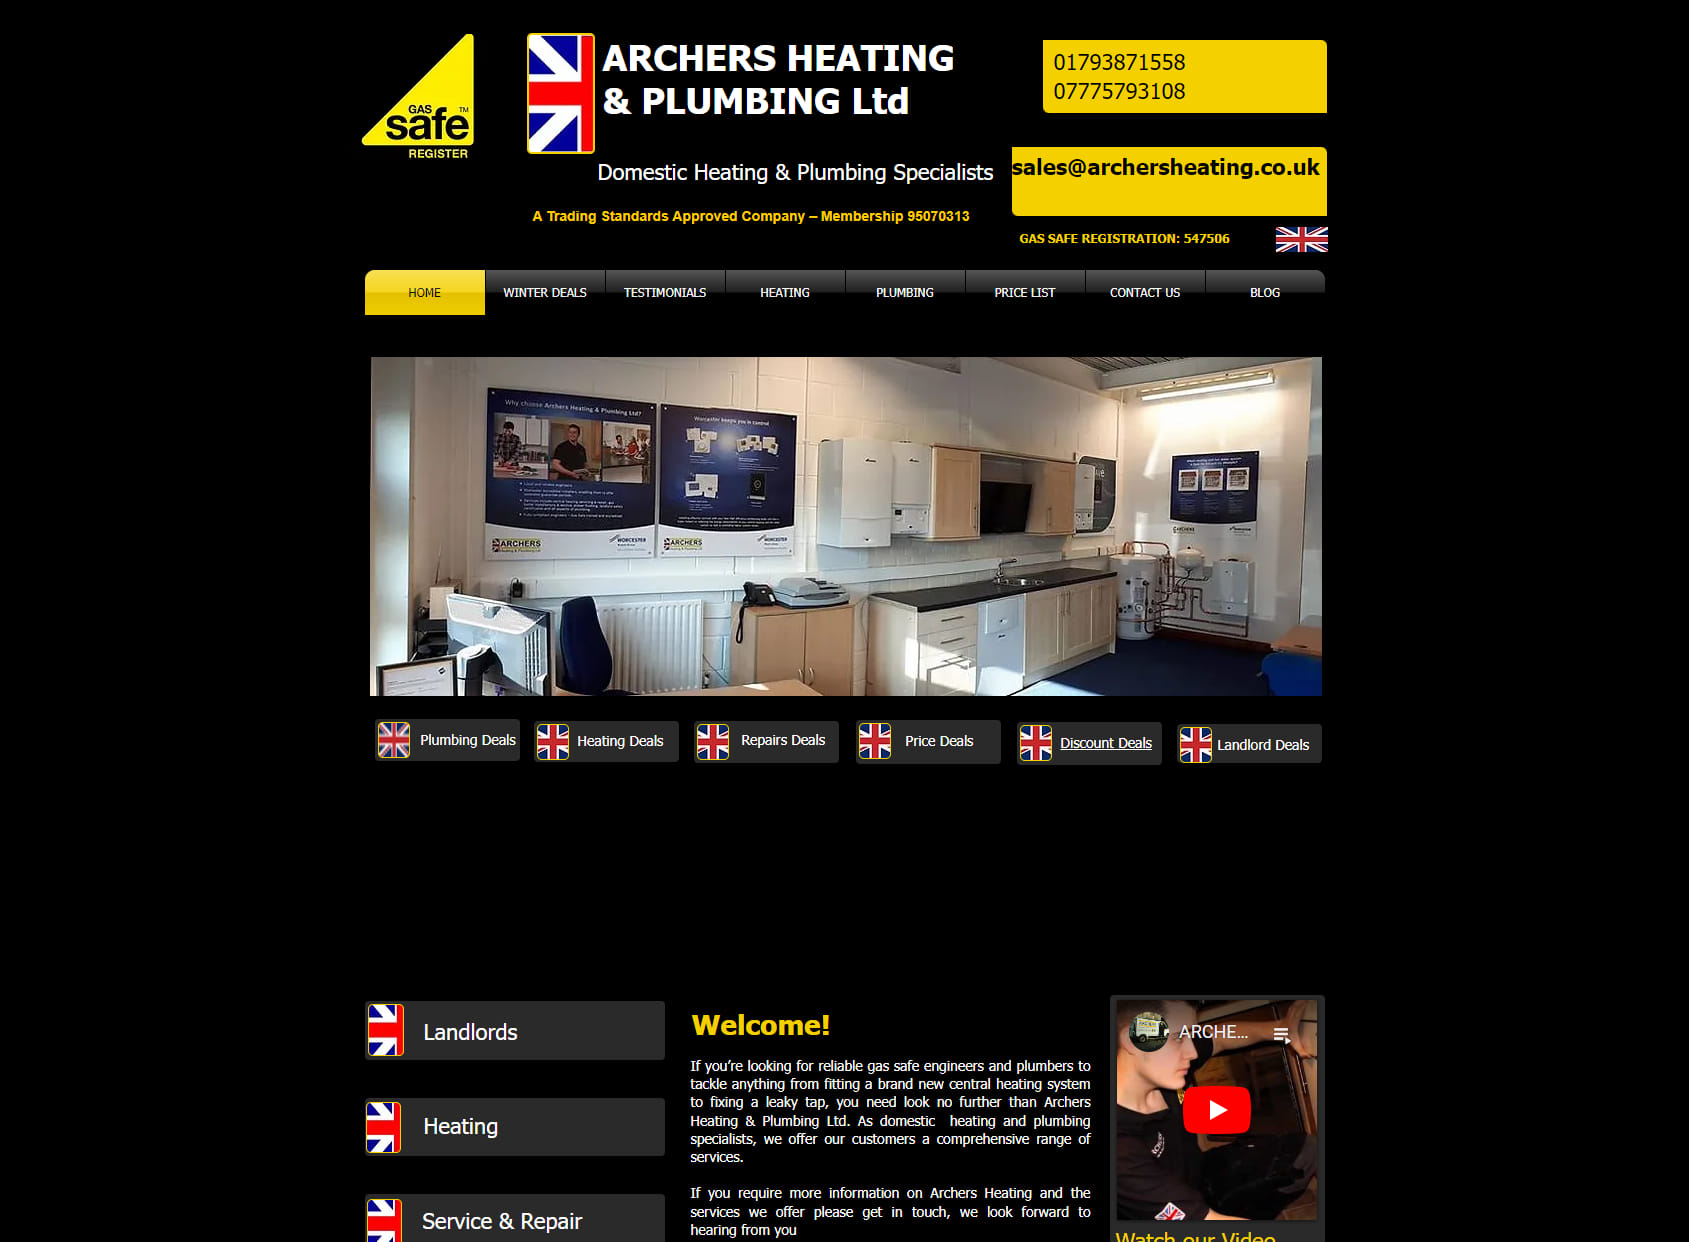 Archers Heating & Plumbing Ltd